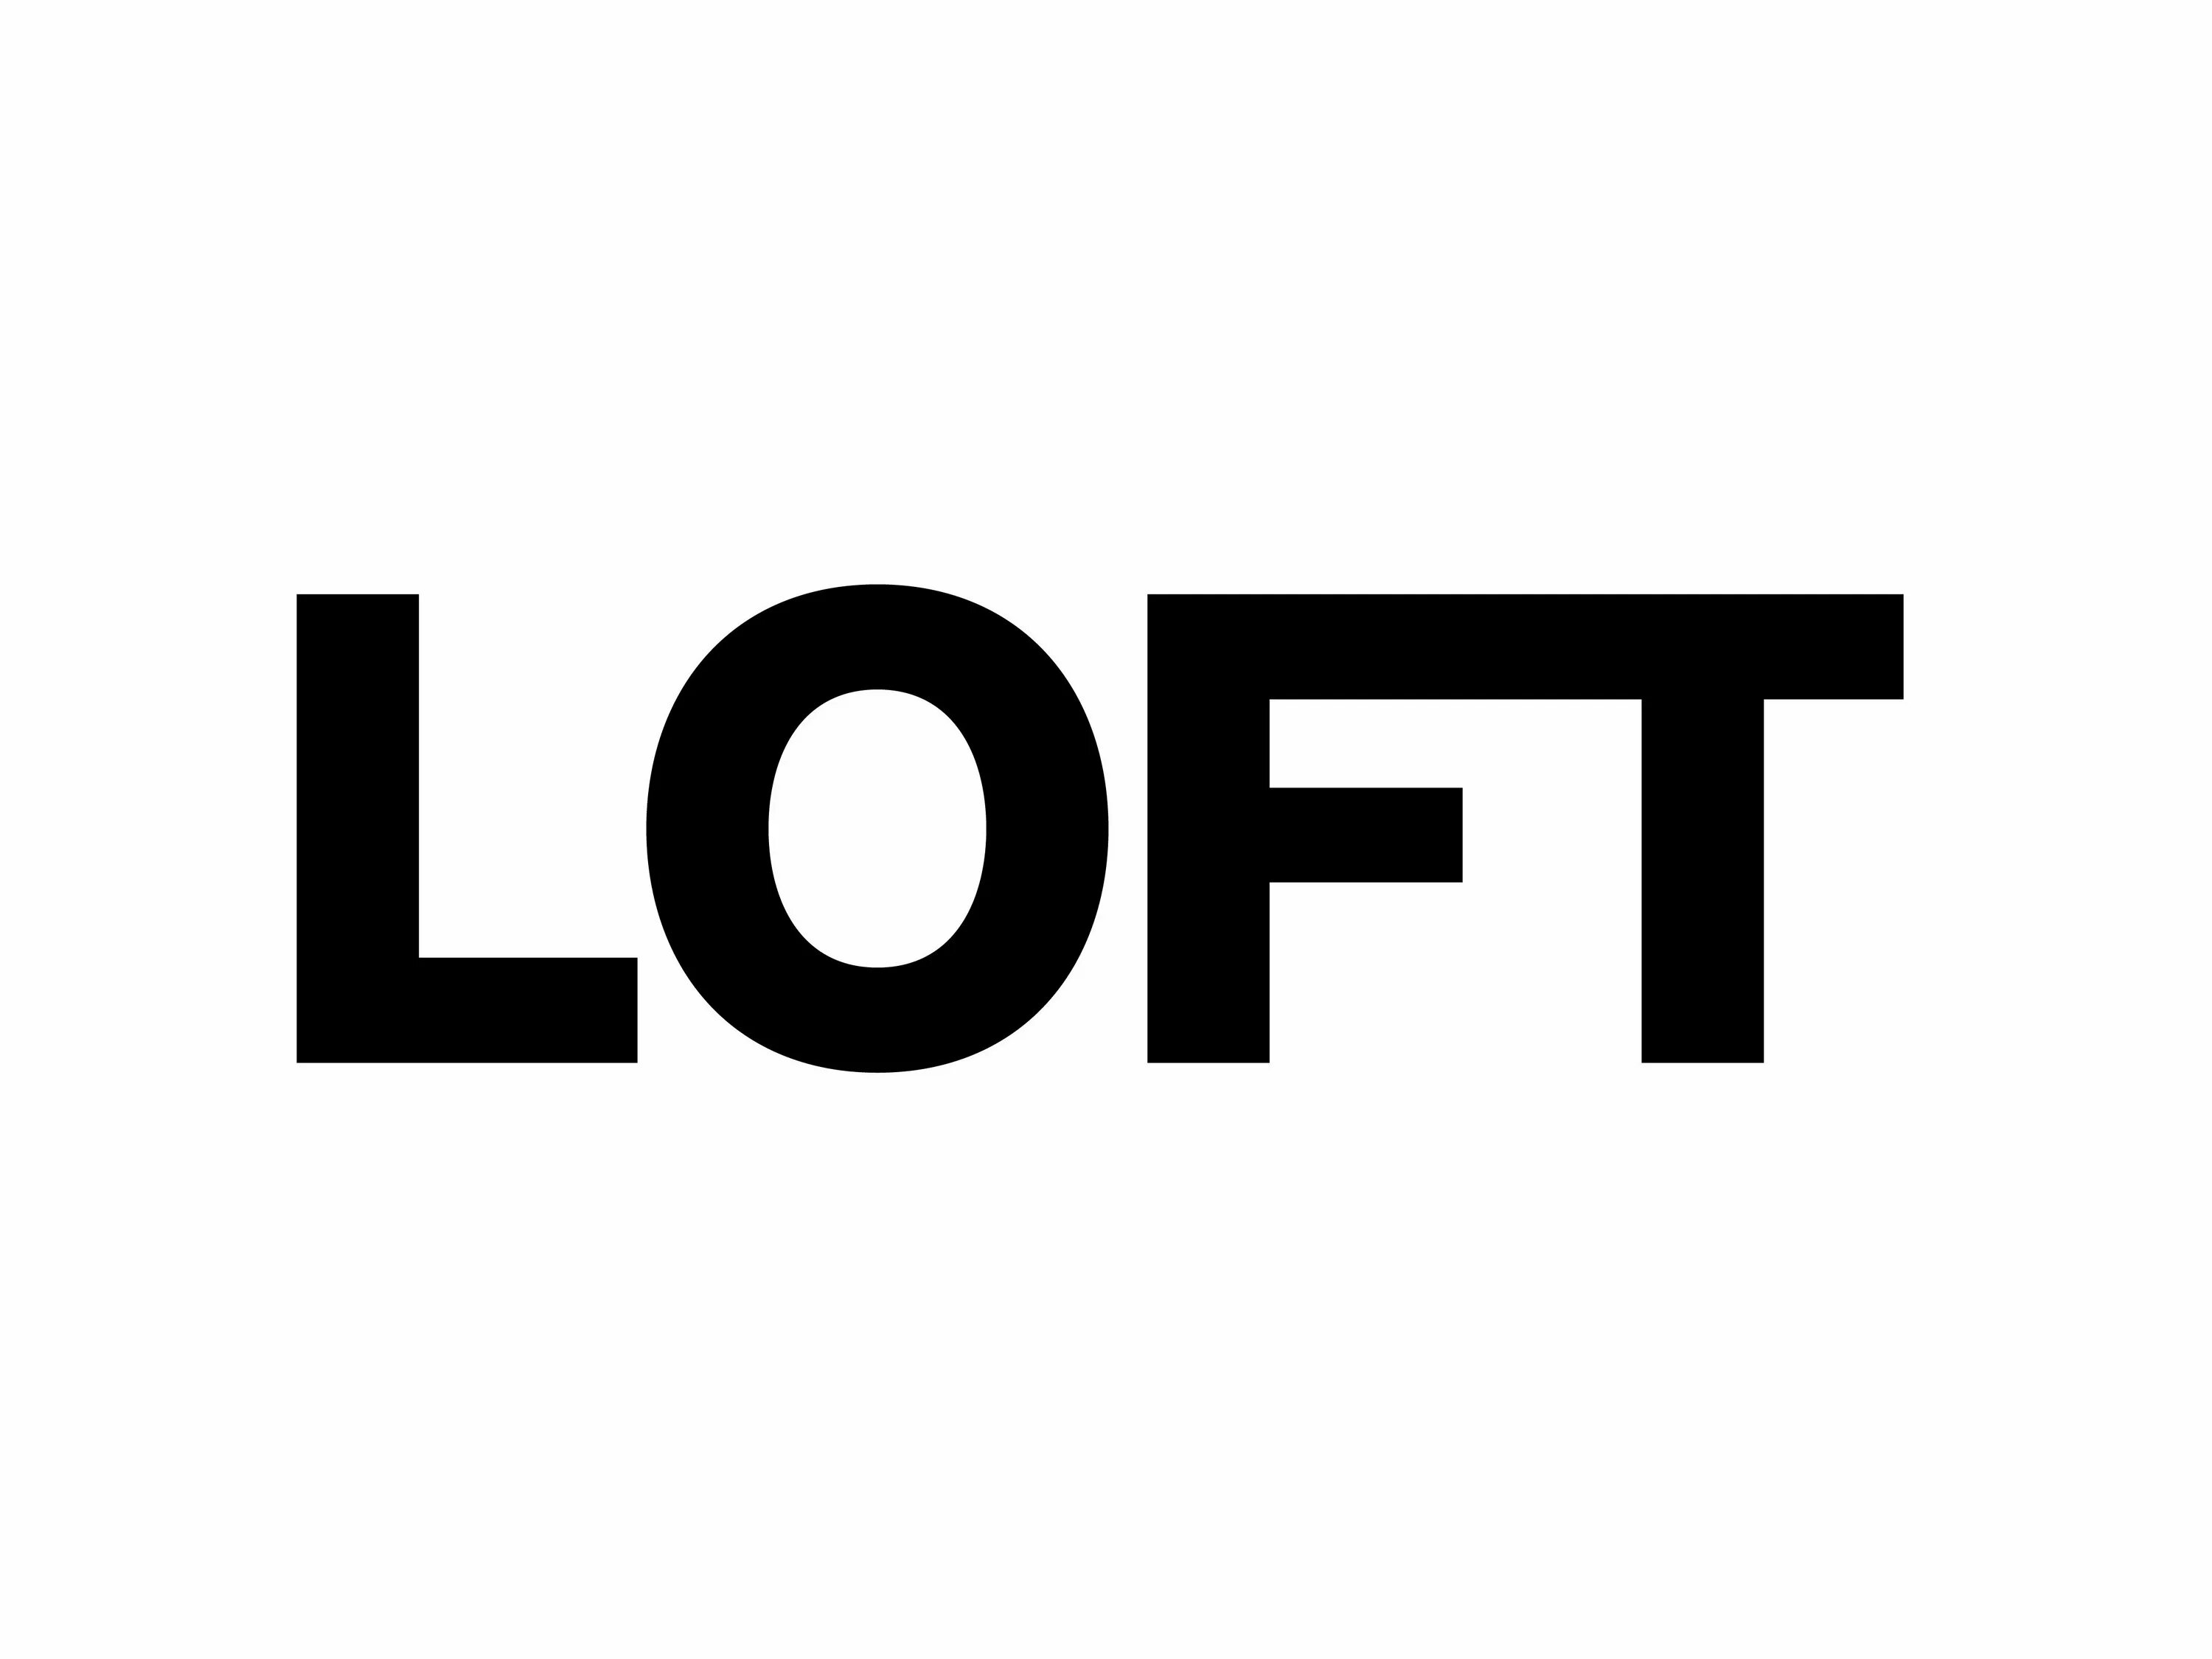 Hayloft текст. Лофт логотип. Loft надпись. Логотип в стиле лофт. Логотипы и надписи в стиле лофт.